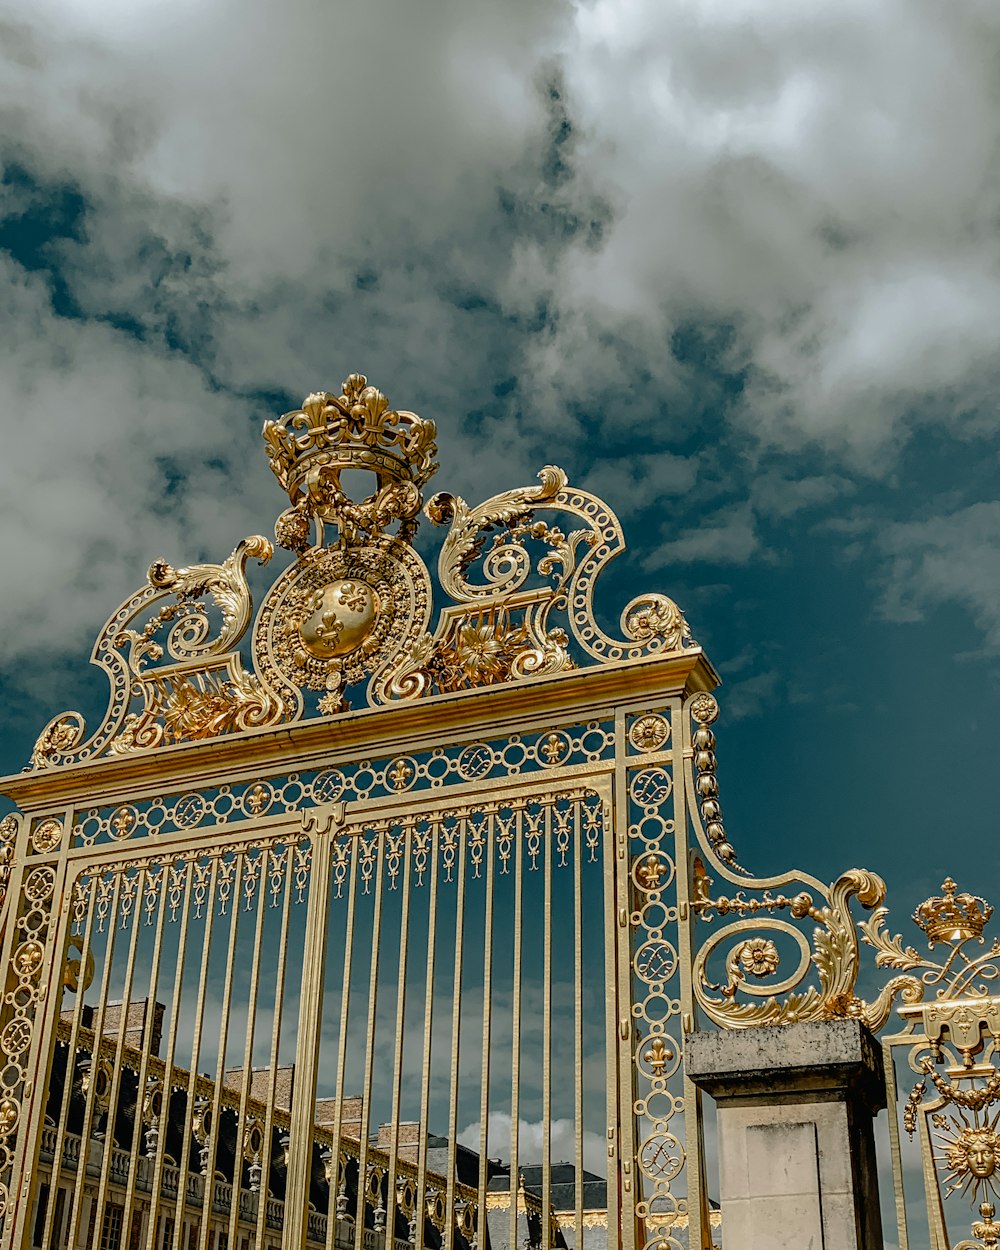 closed gold metal gate